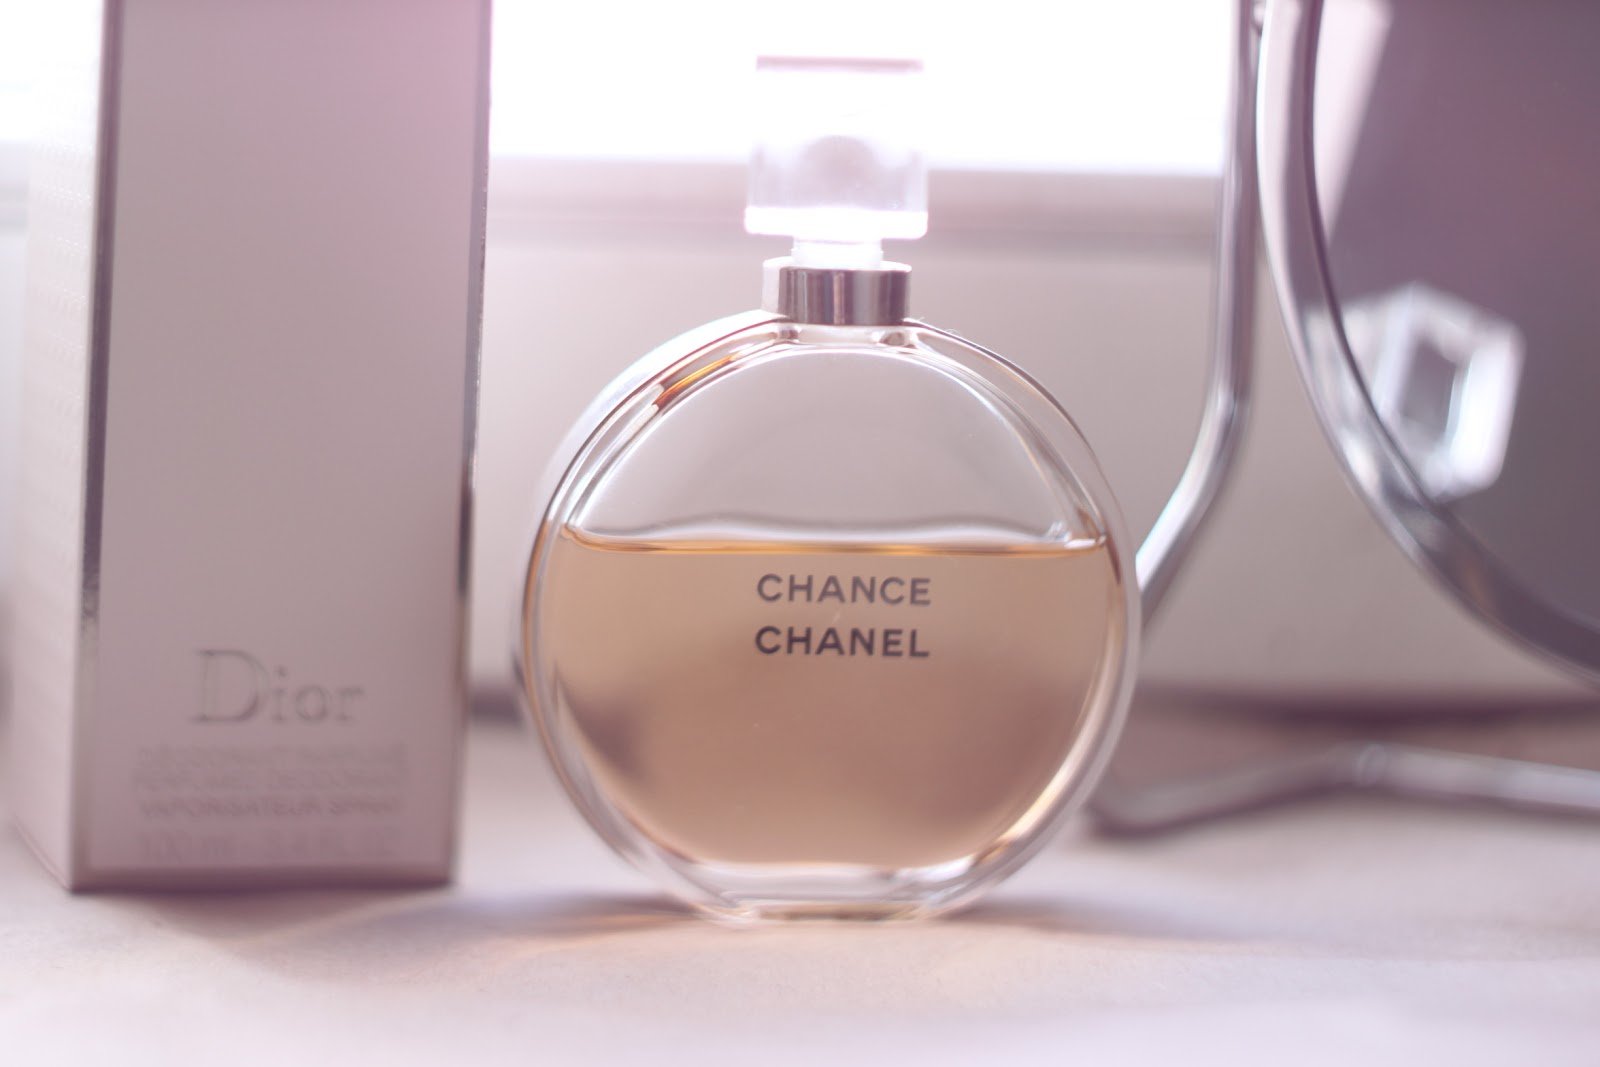 Шанель шанс похожие ароматы. Шанель шанс Шейк 42. Шанель шанс Вива. Шанель шанс линейка. Chanel chance реклама.